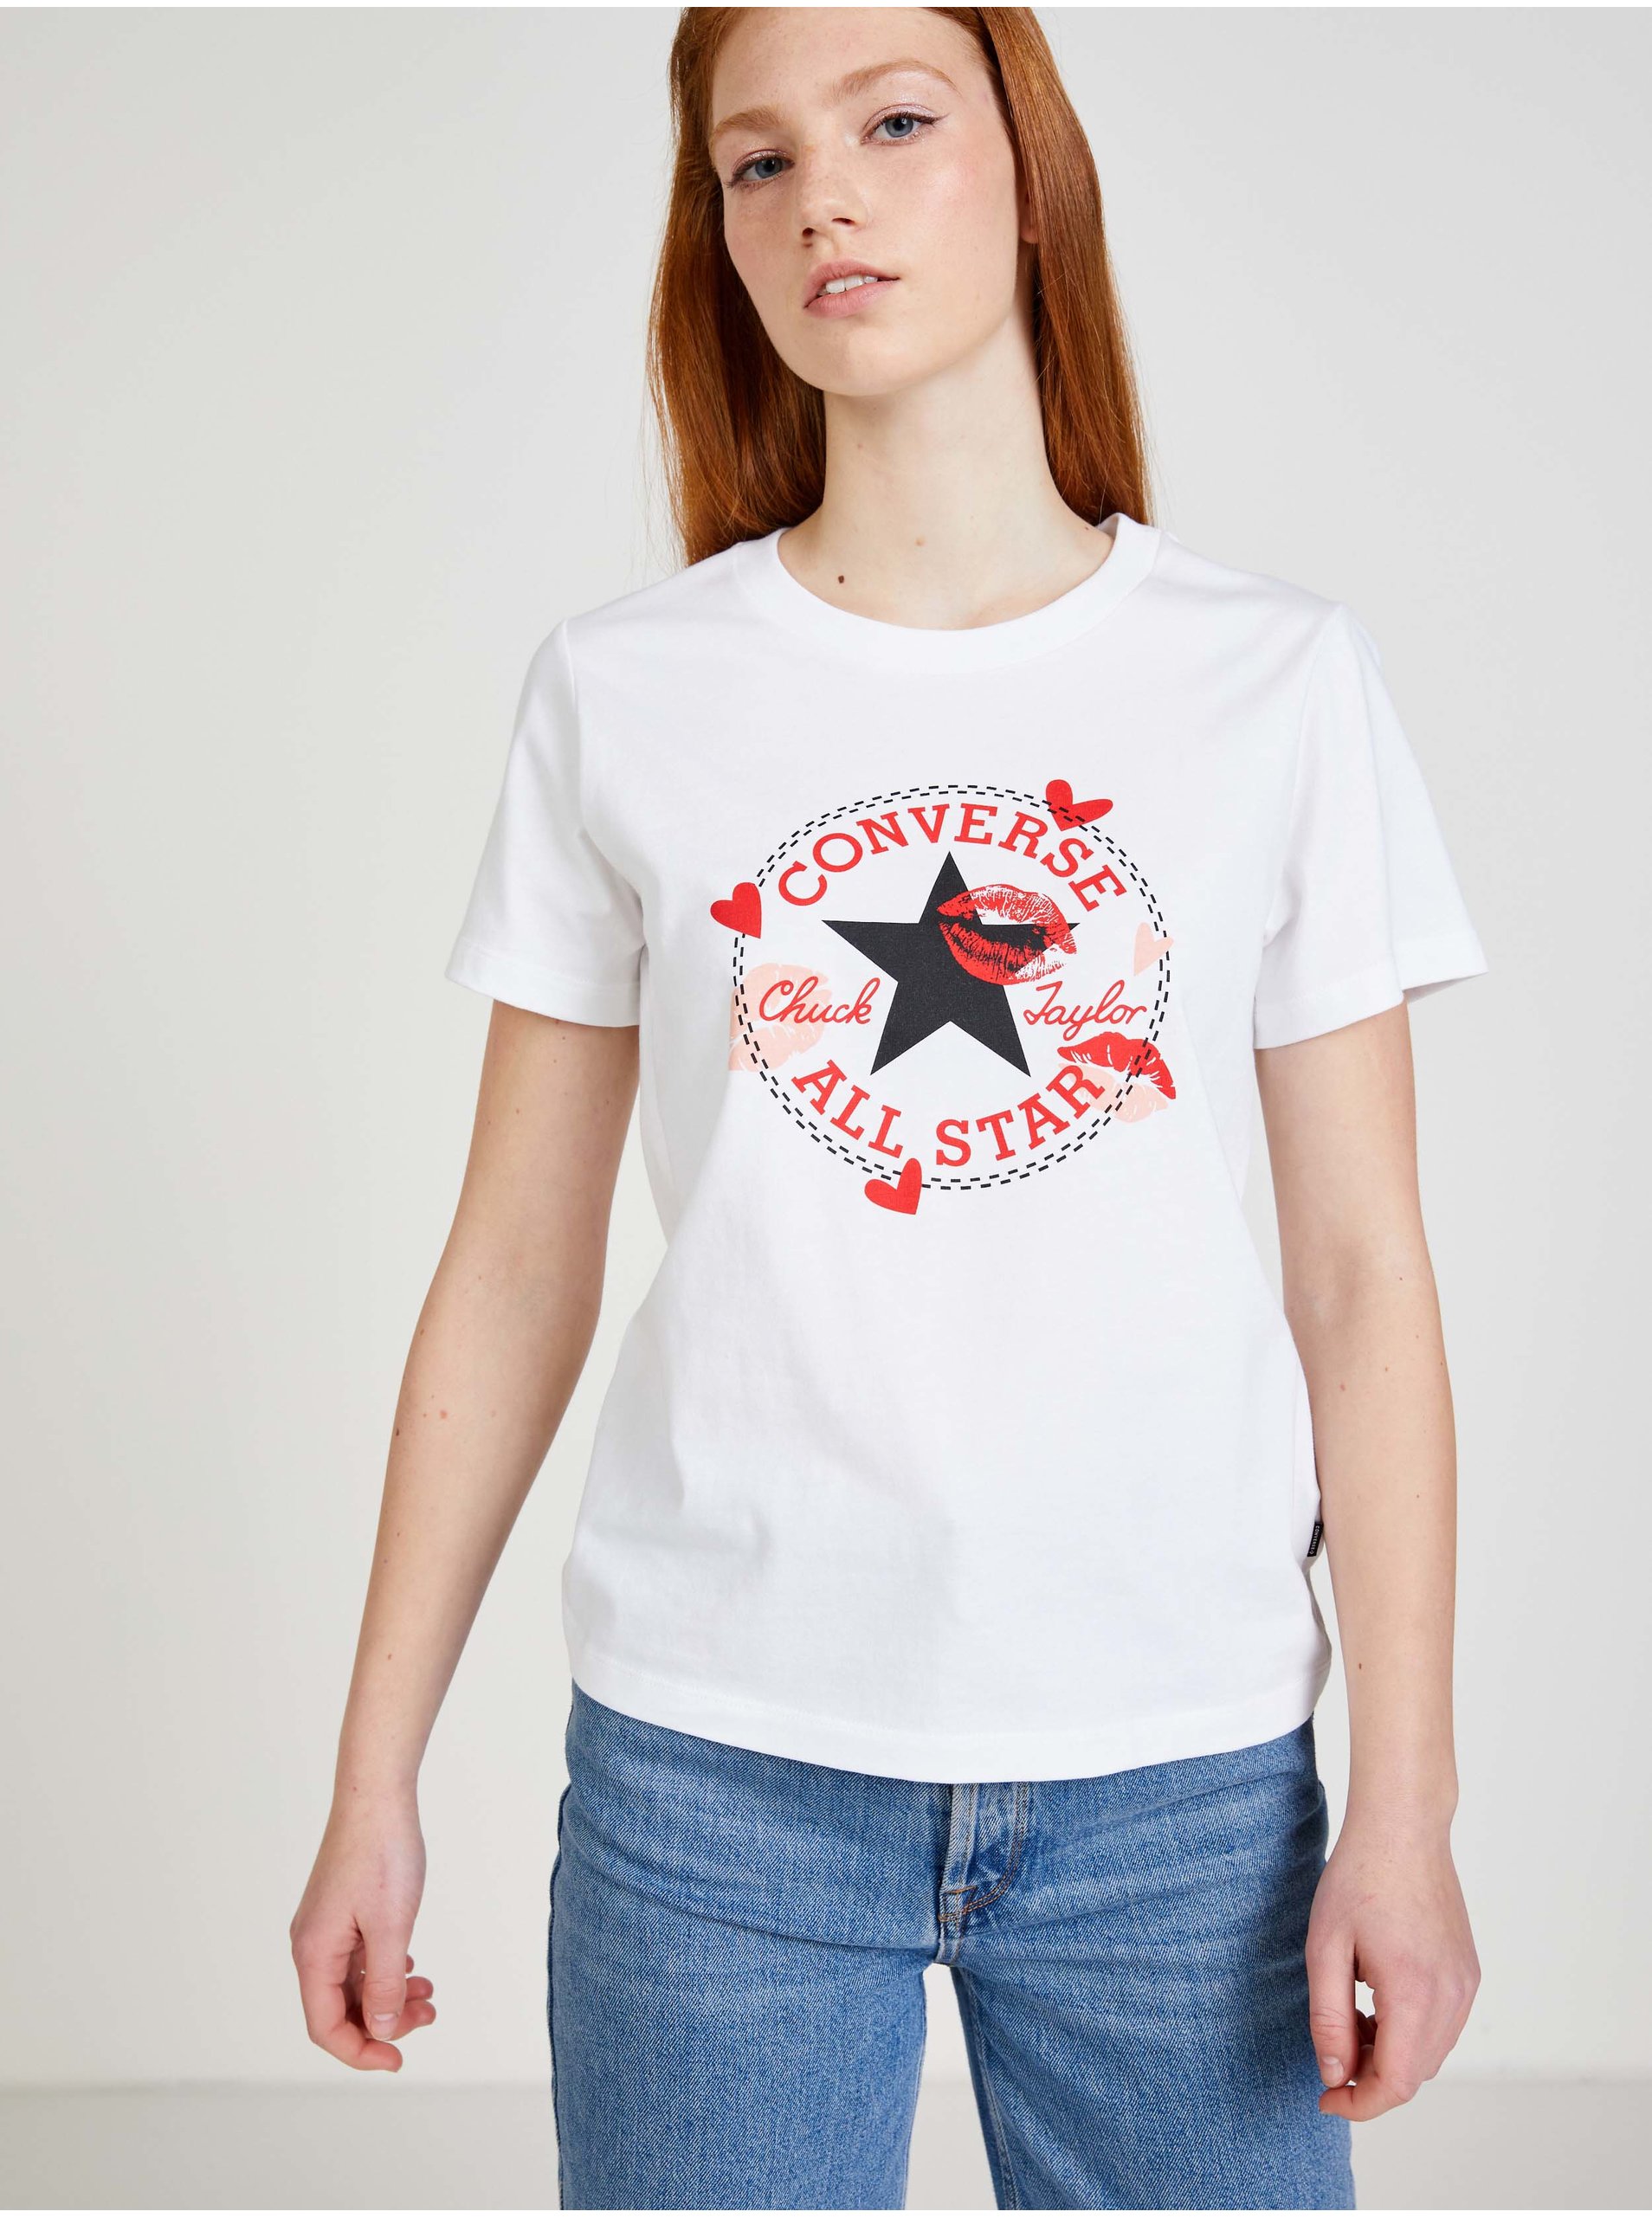 Converse Valentine's Day White Women's T-Shirt - Women